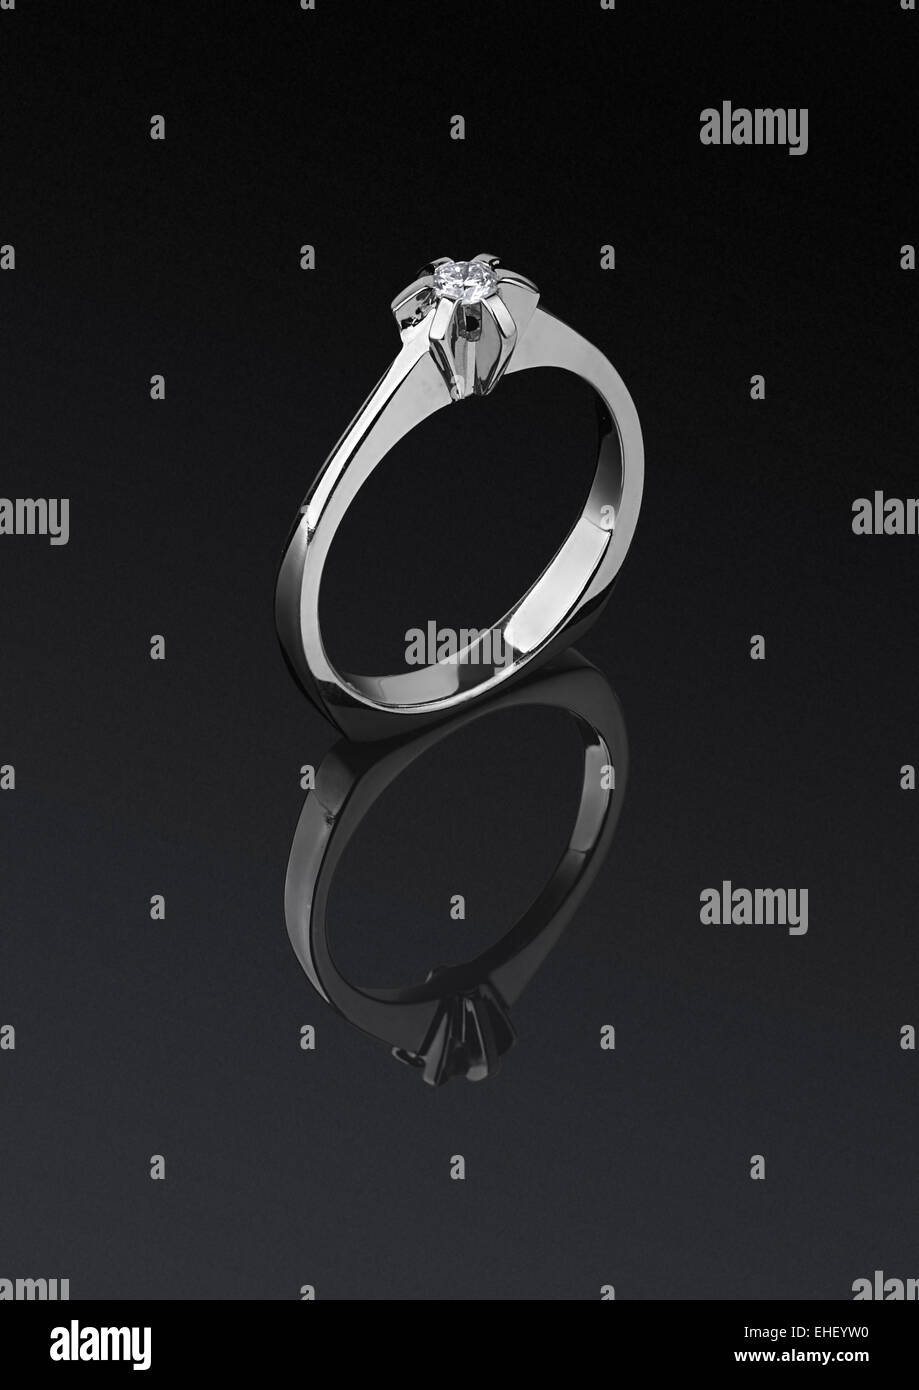 Ring with diamonds on dark background Stock Photo